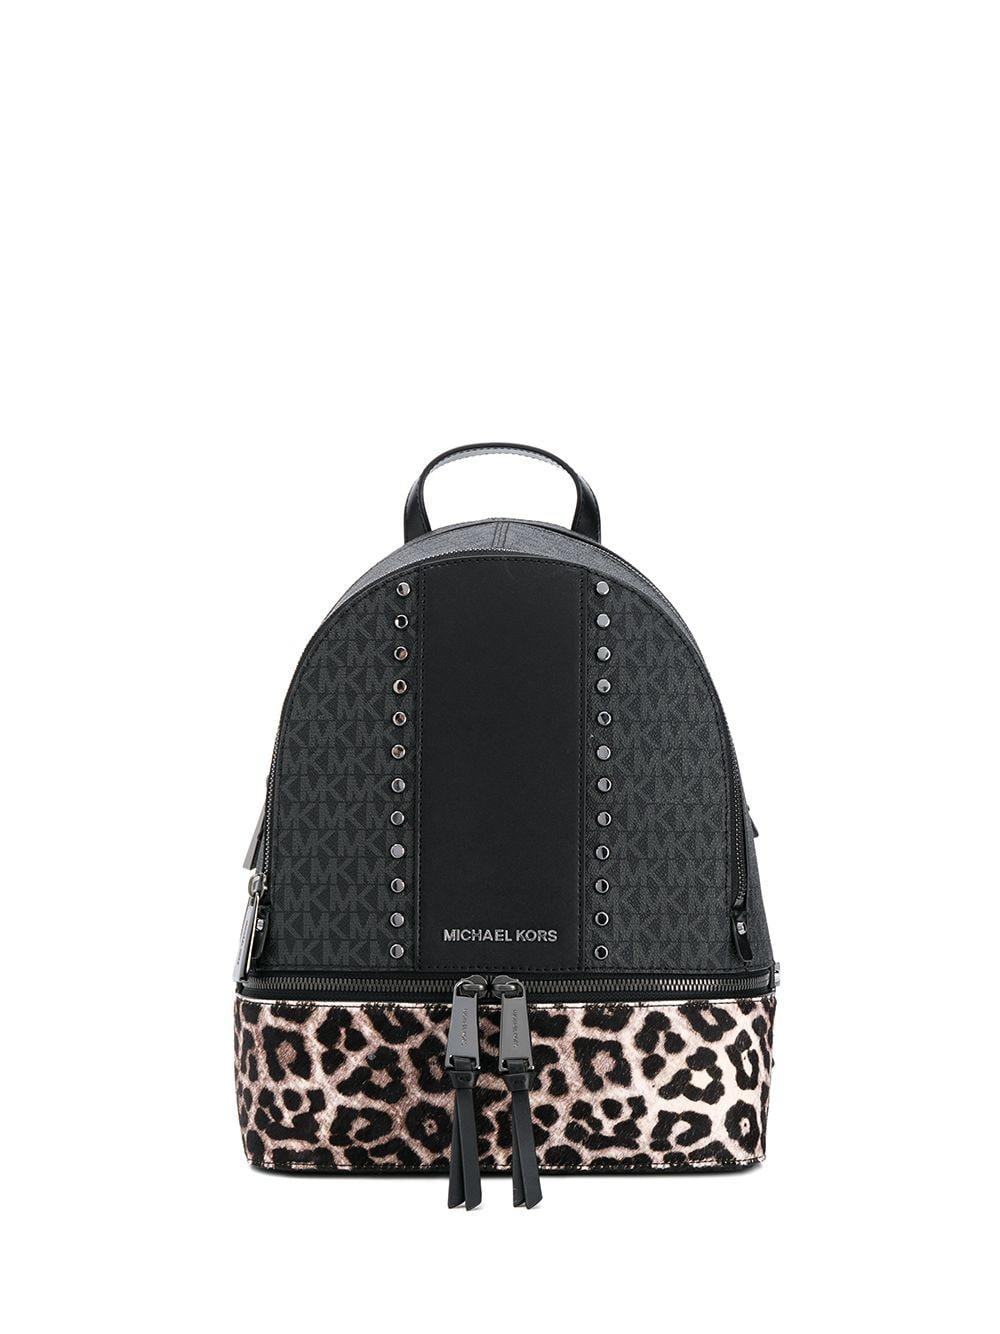 leopard michael kors backpack